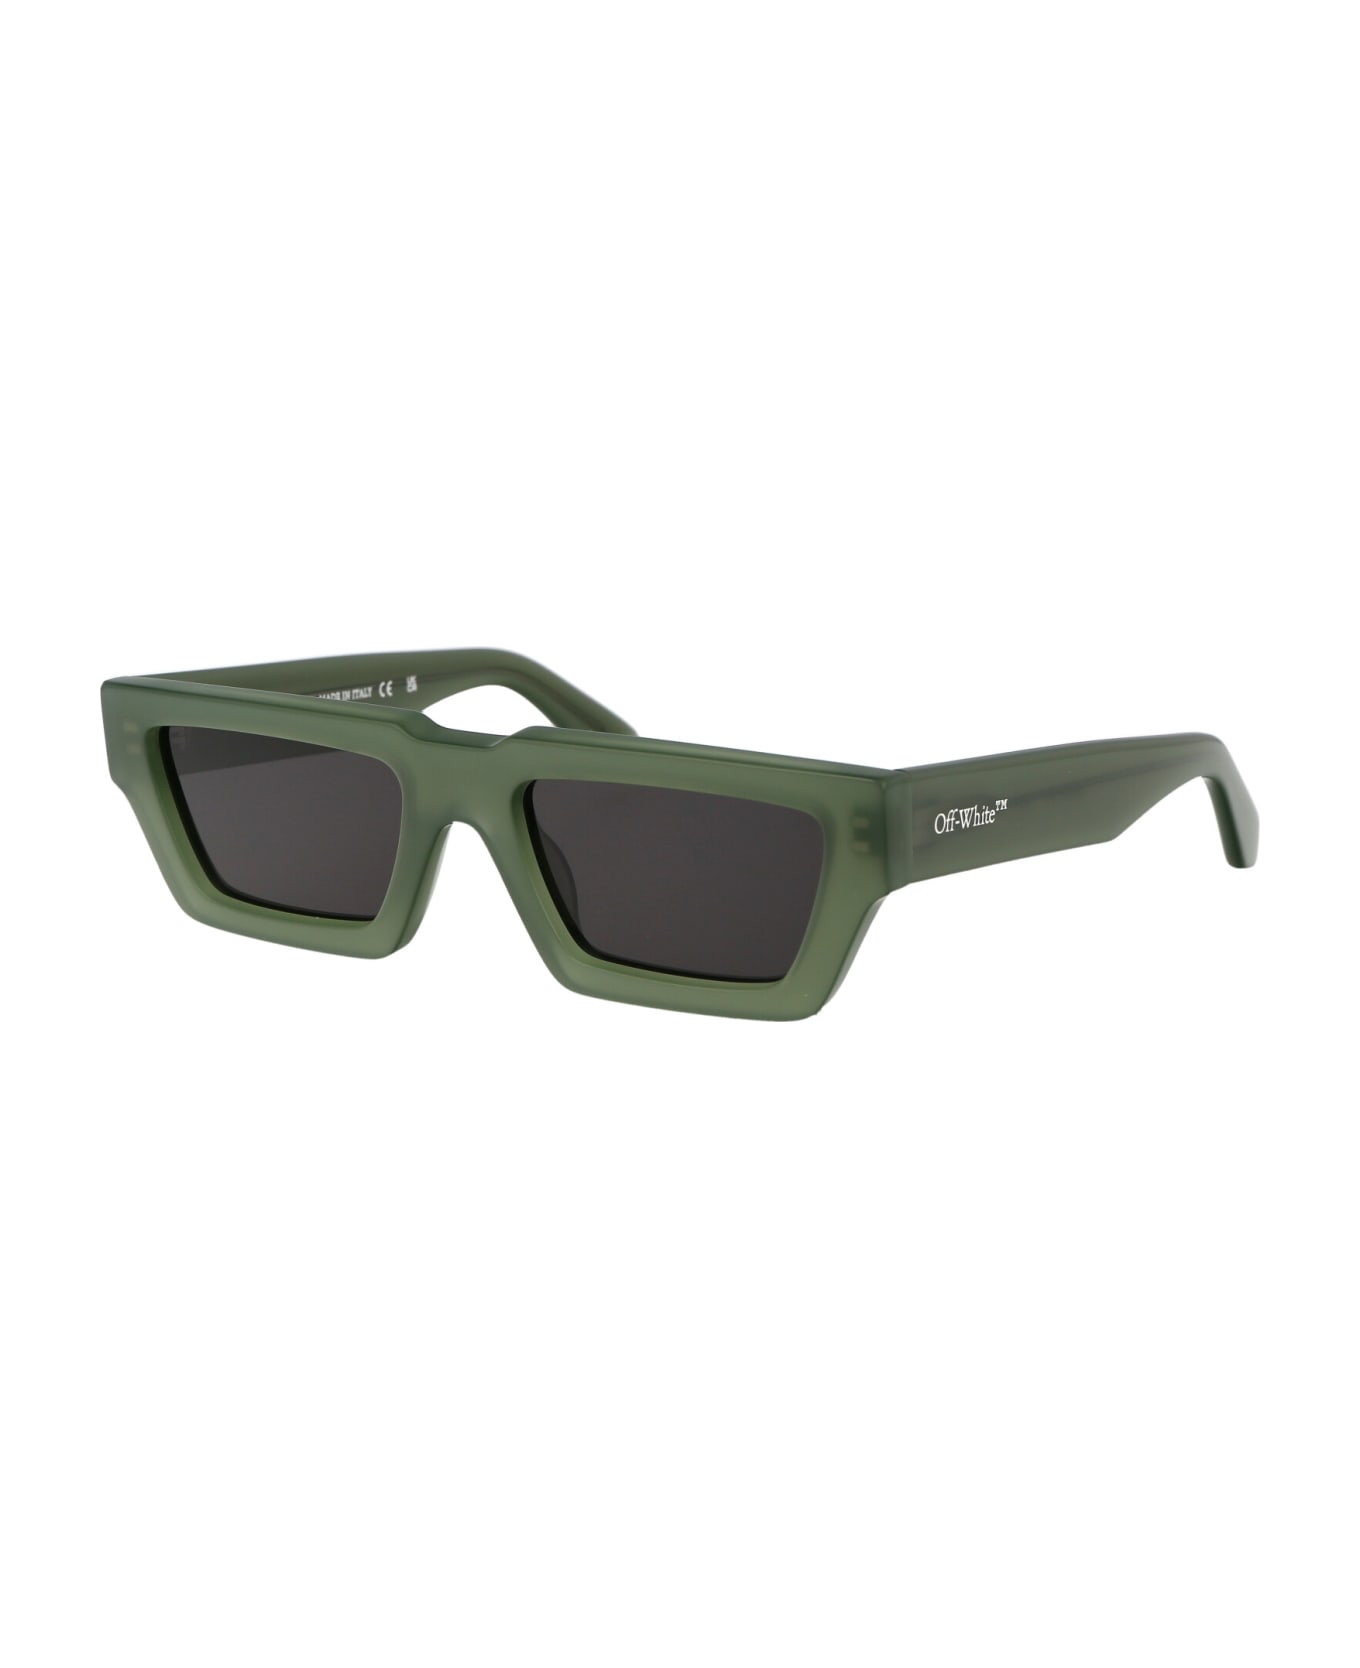 Off-White Manchester Sunglasses - green サングラス